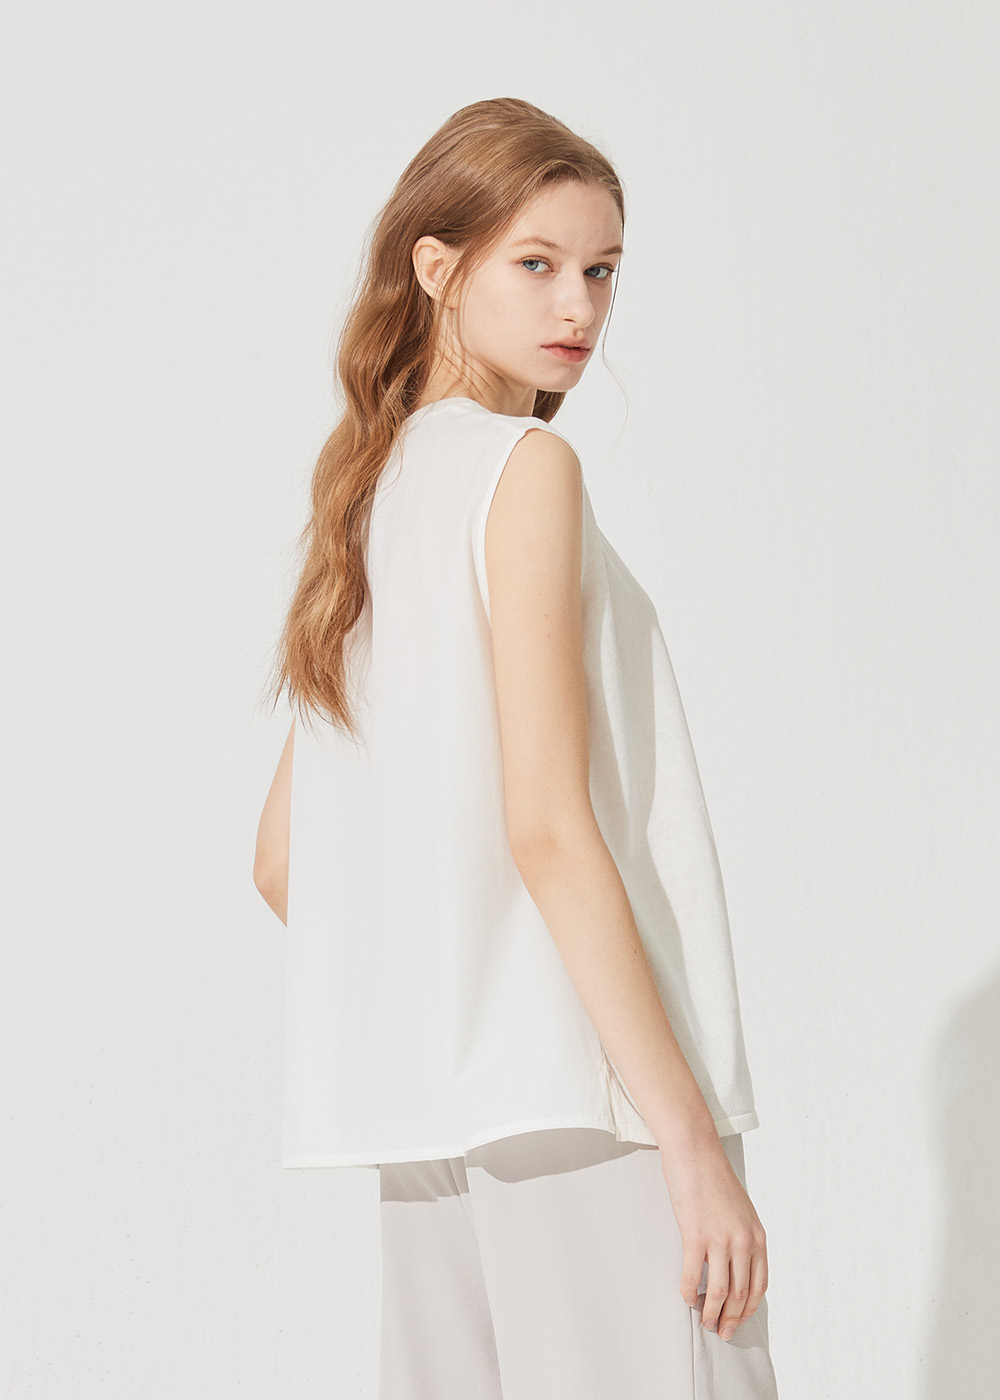 Standard sleeveless shirt (white)